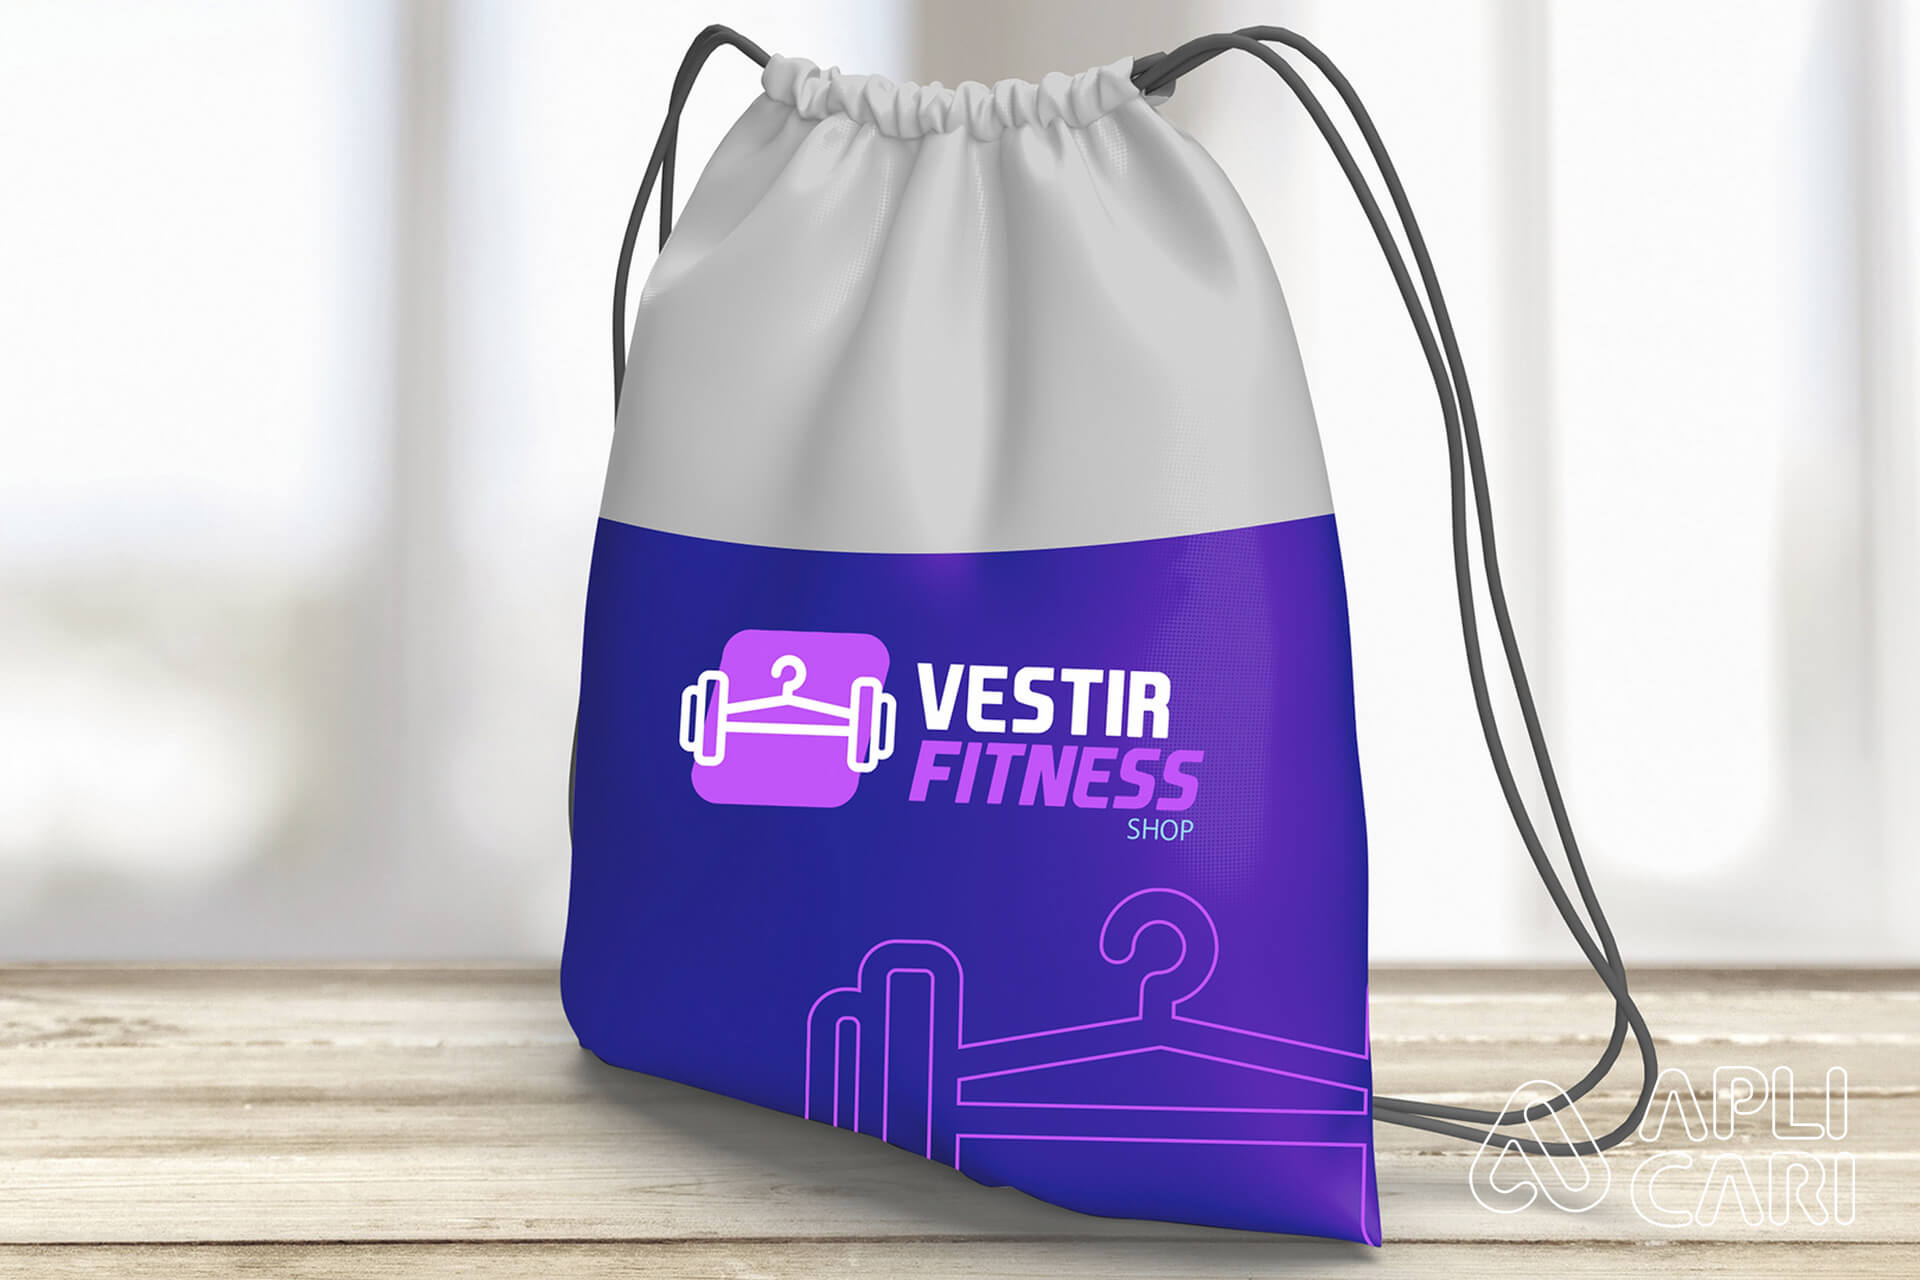 Vestir Fitness